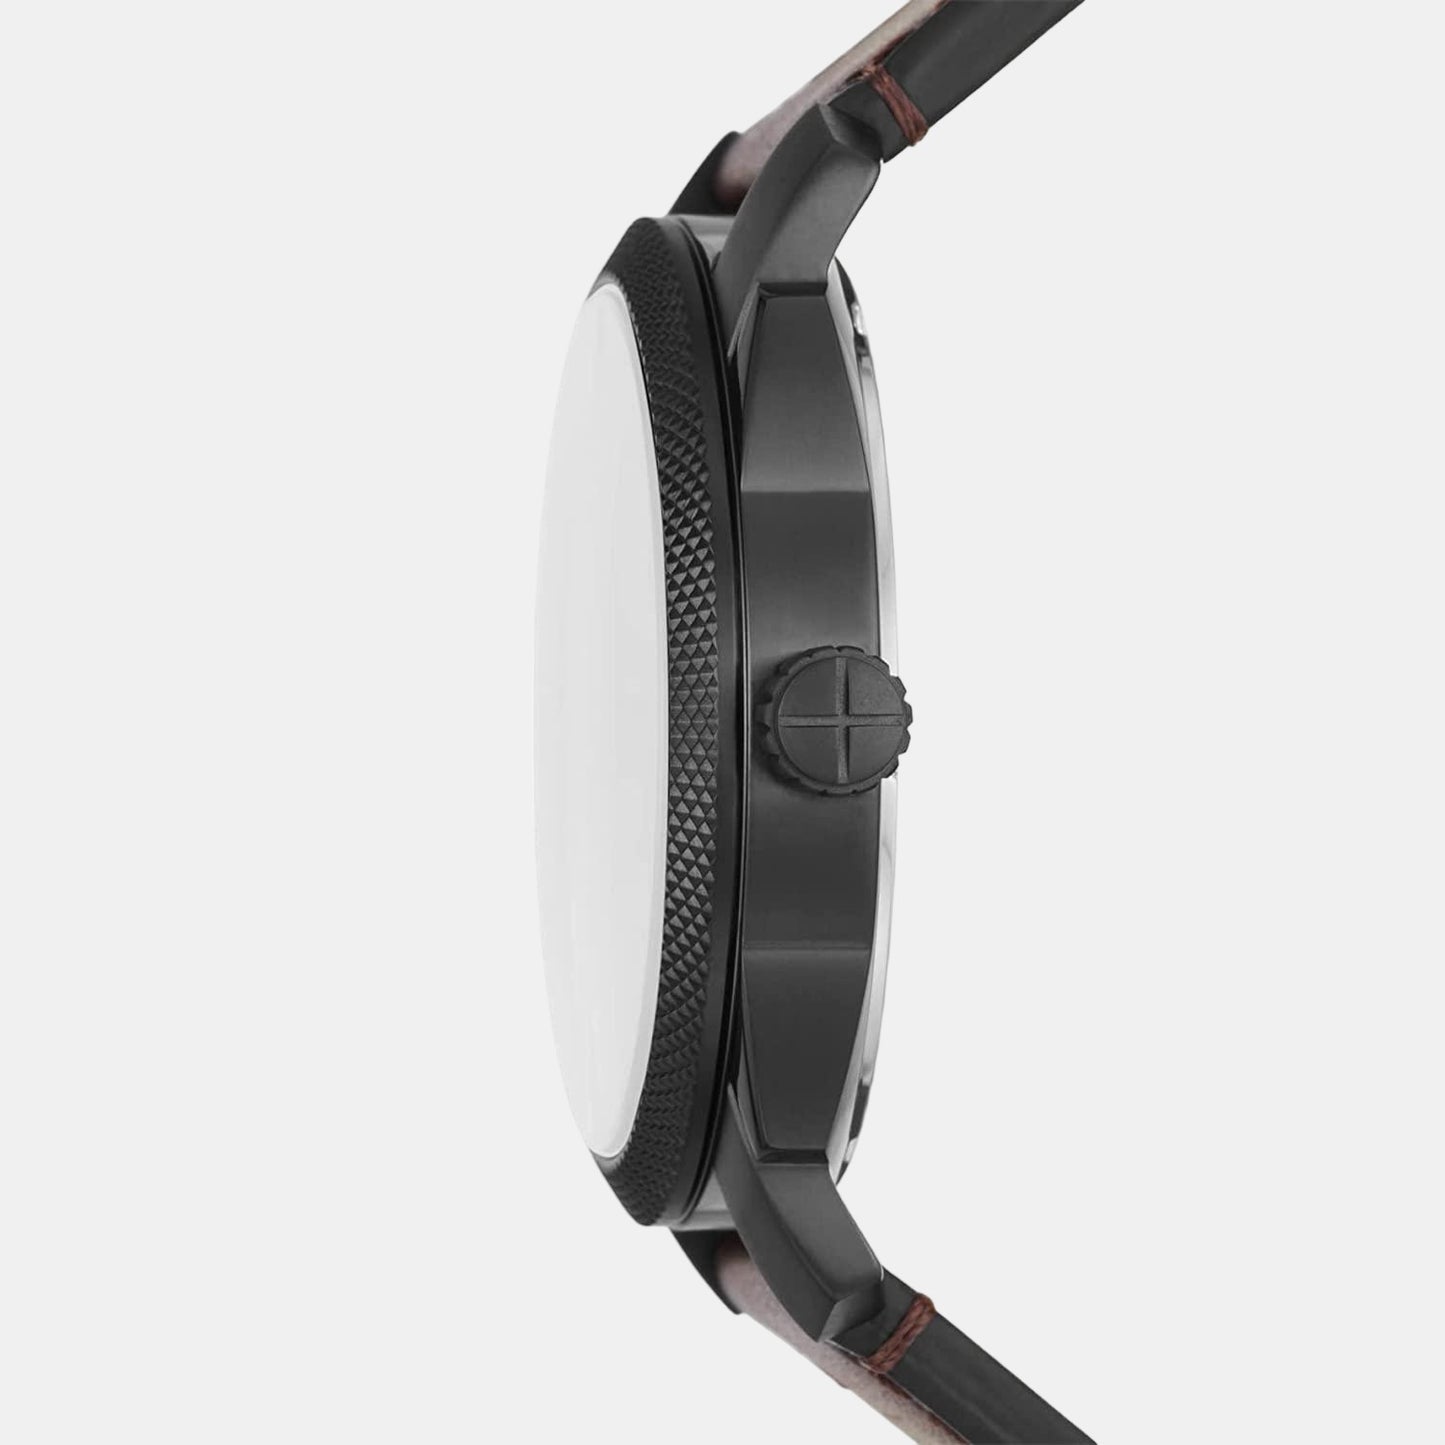 Male Black Analog Leather Watch FS5901